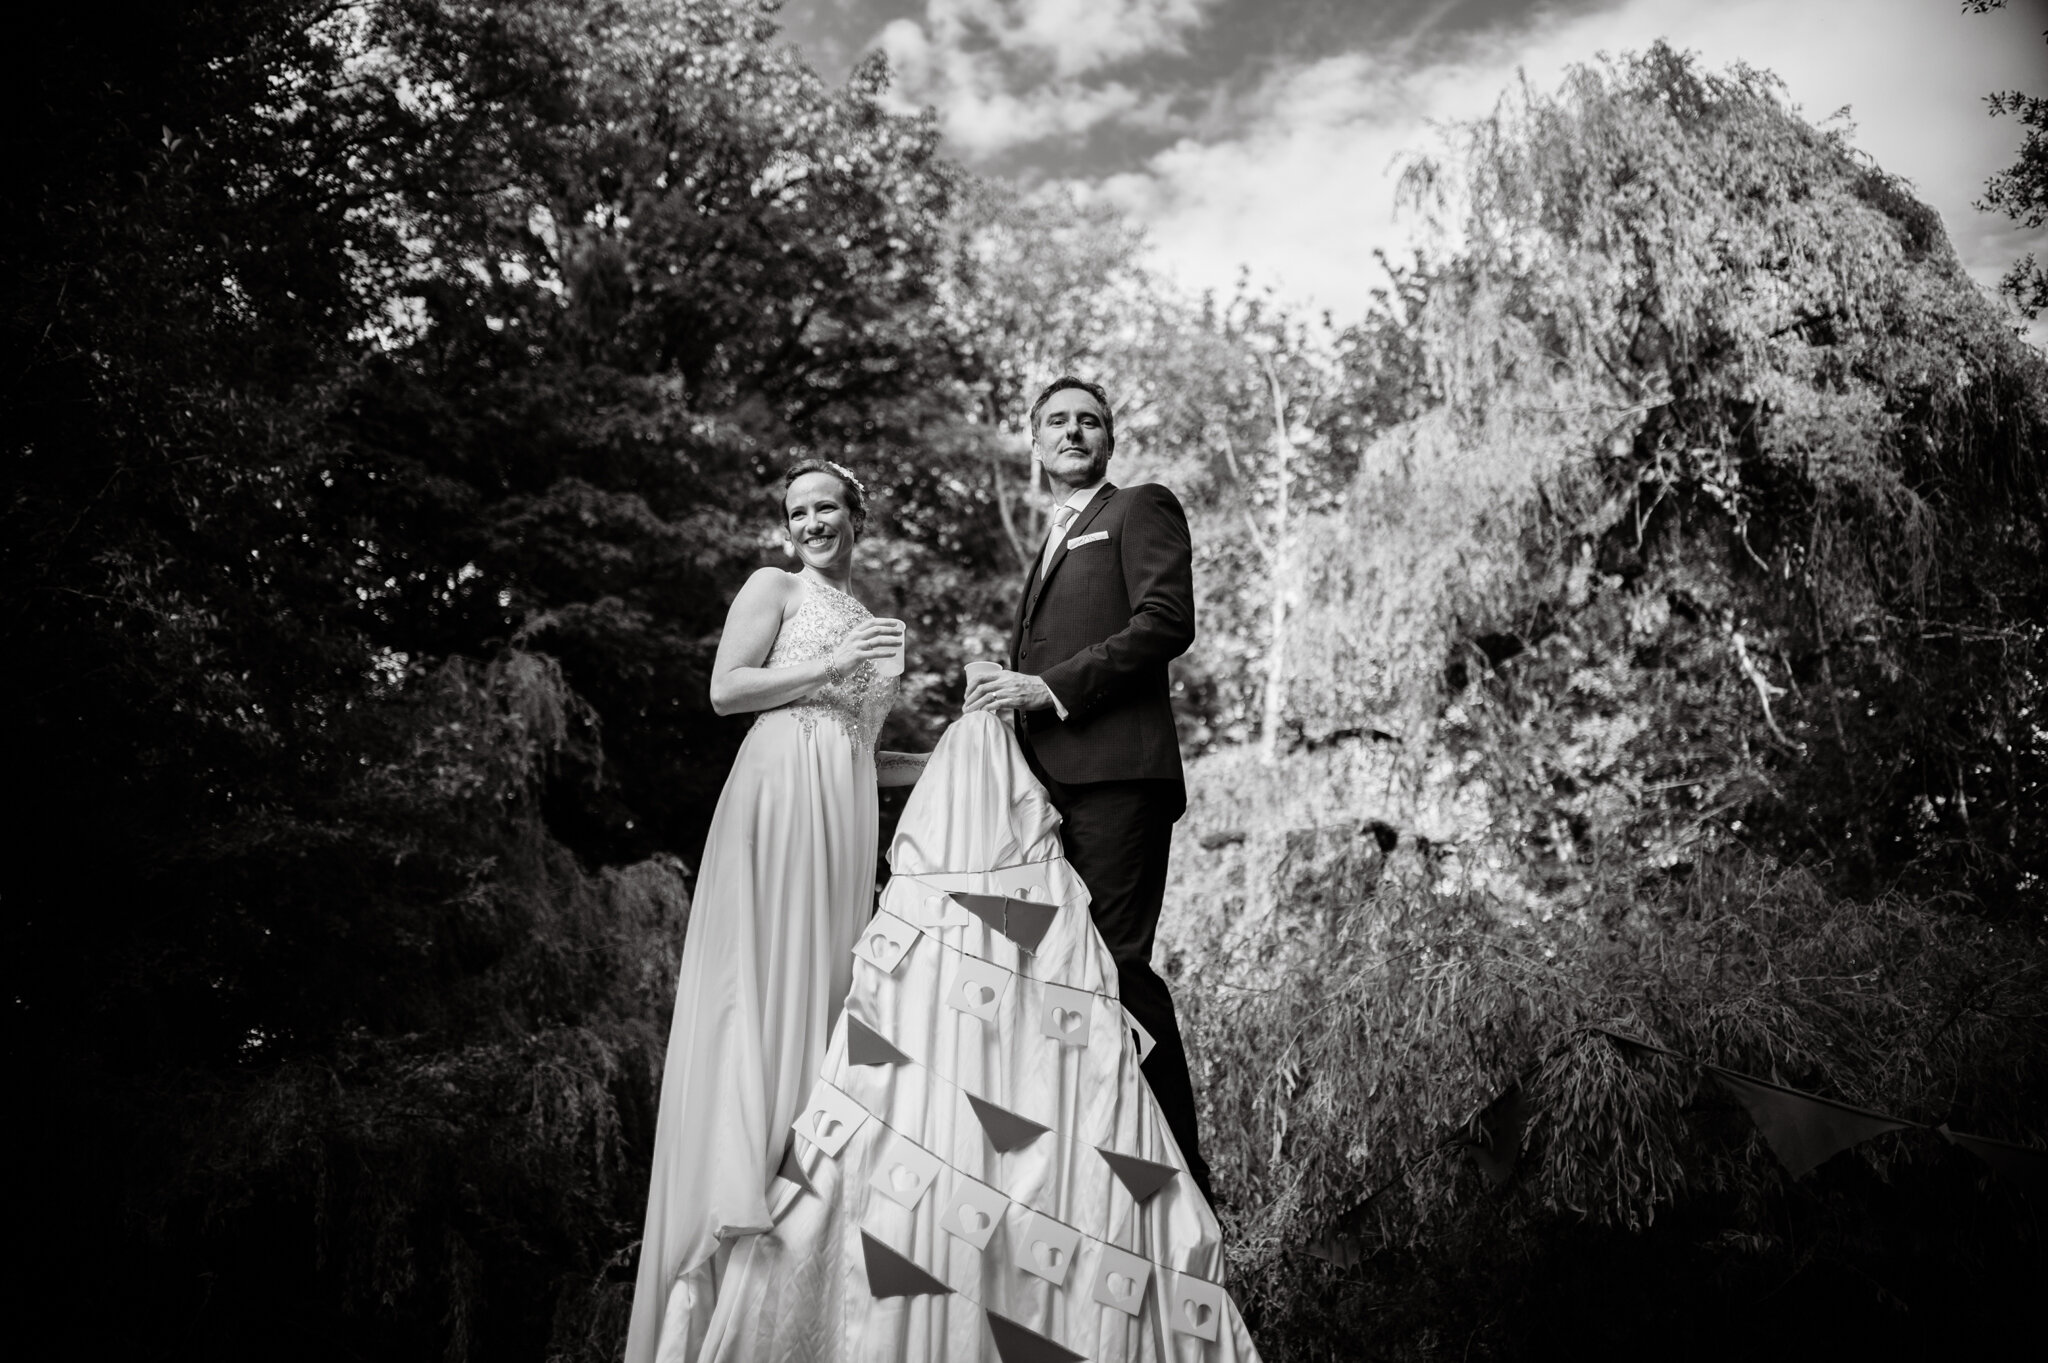 Clearmind-wedding-vancouver-photographer-103.jpg